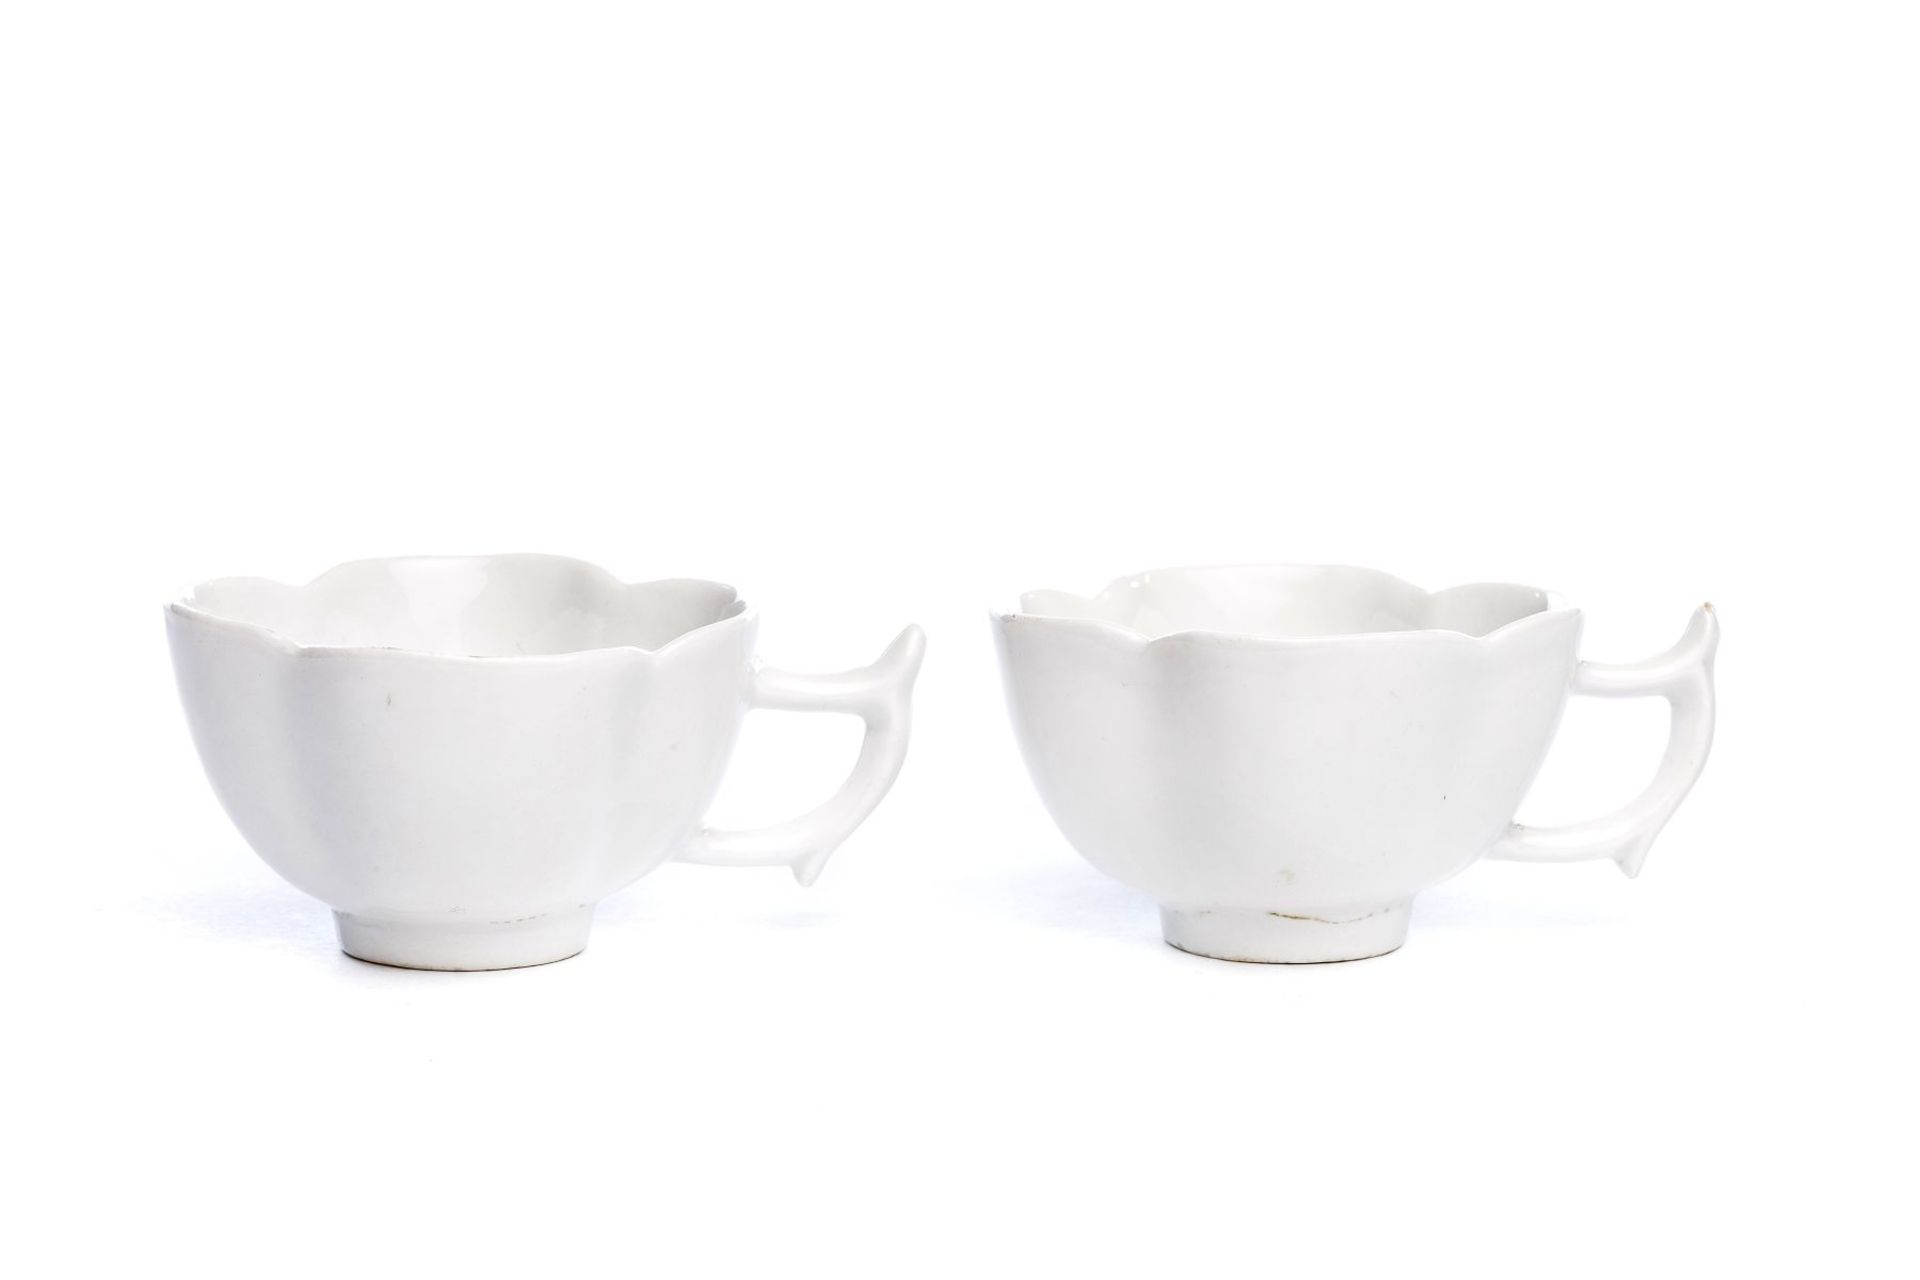 Two small cups, white Böttger porcelain, Meissen 1715